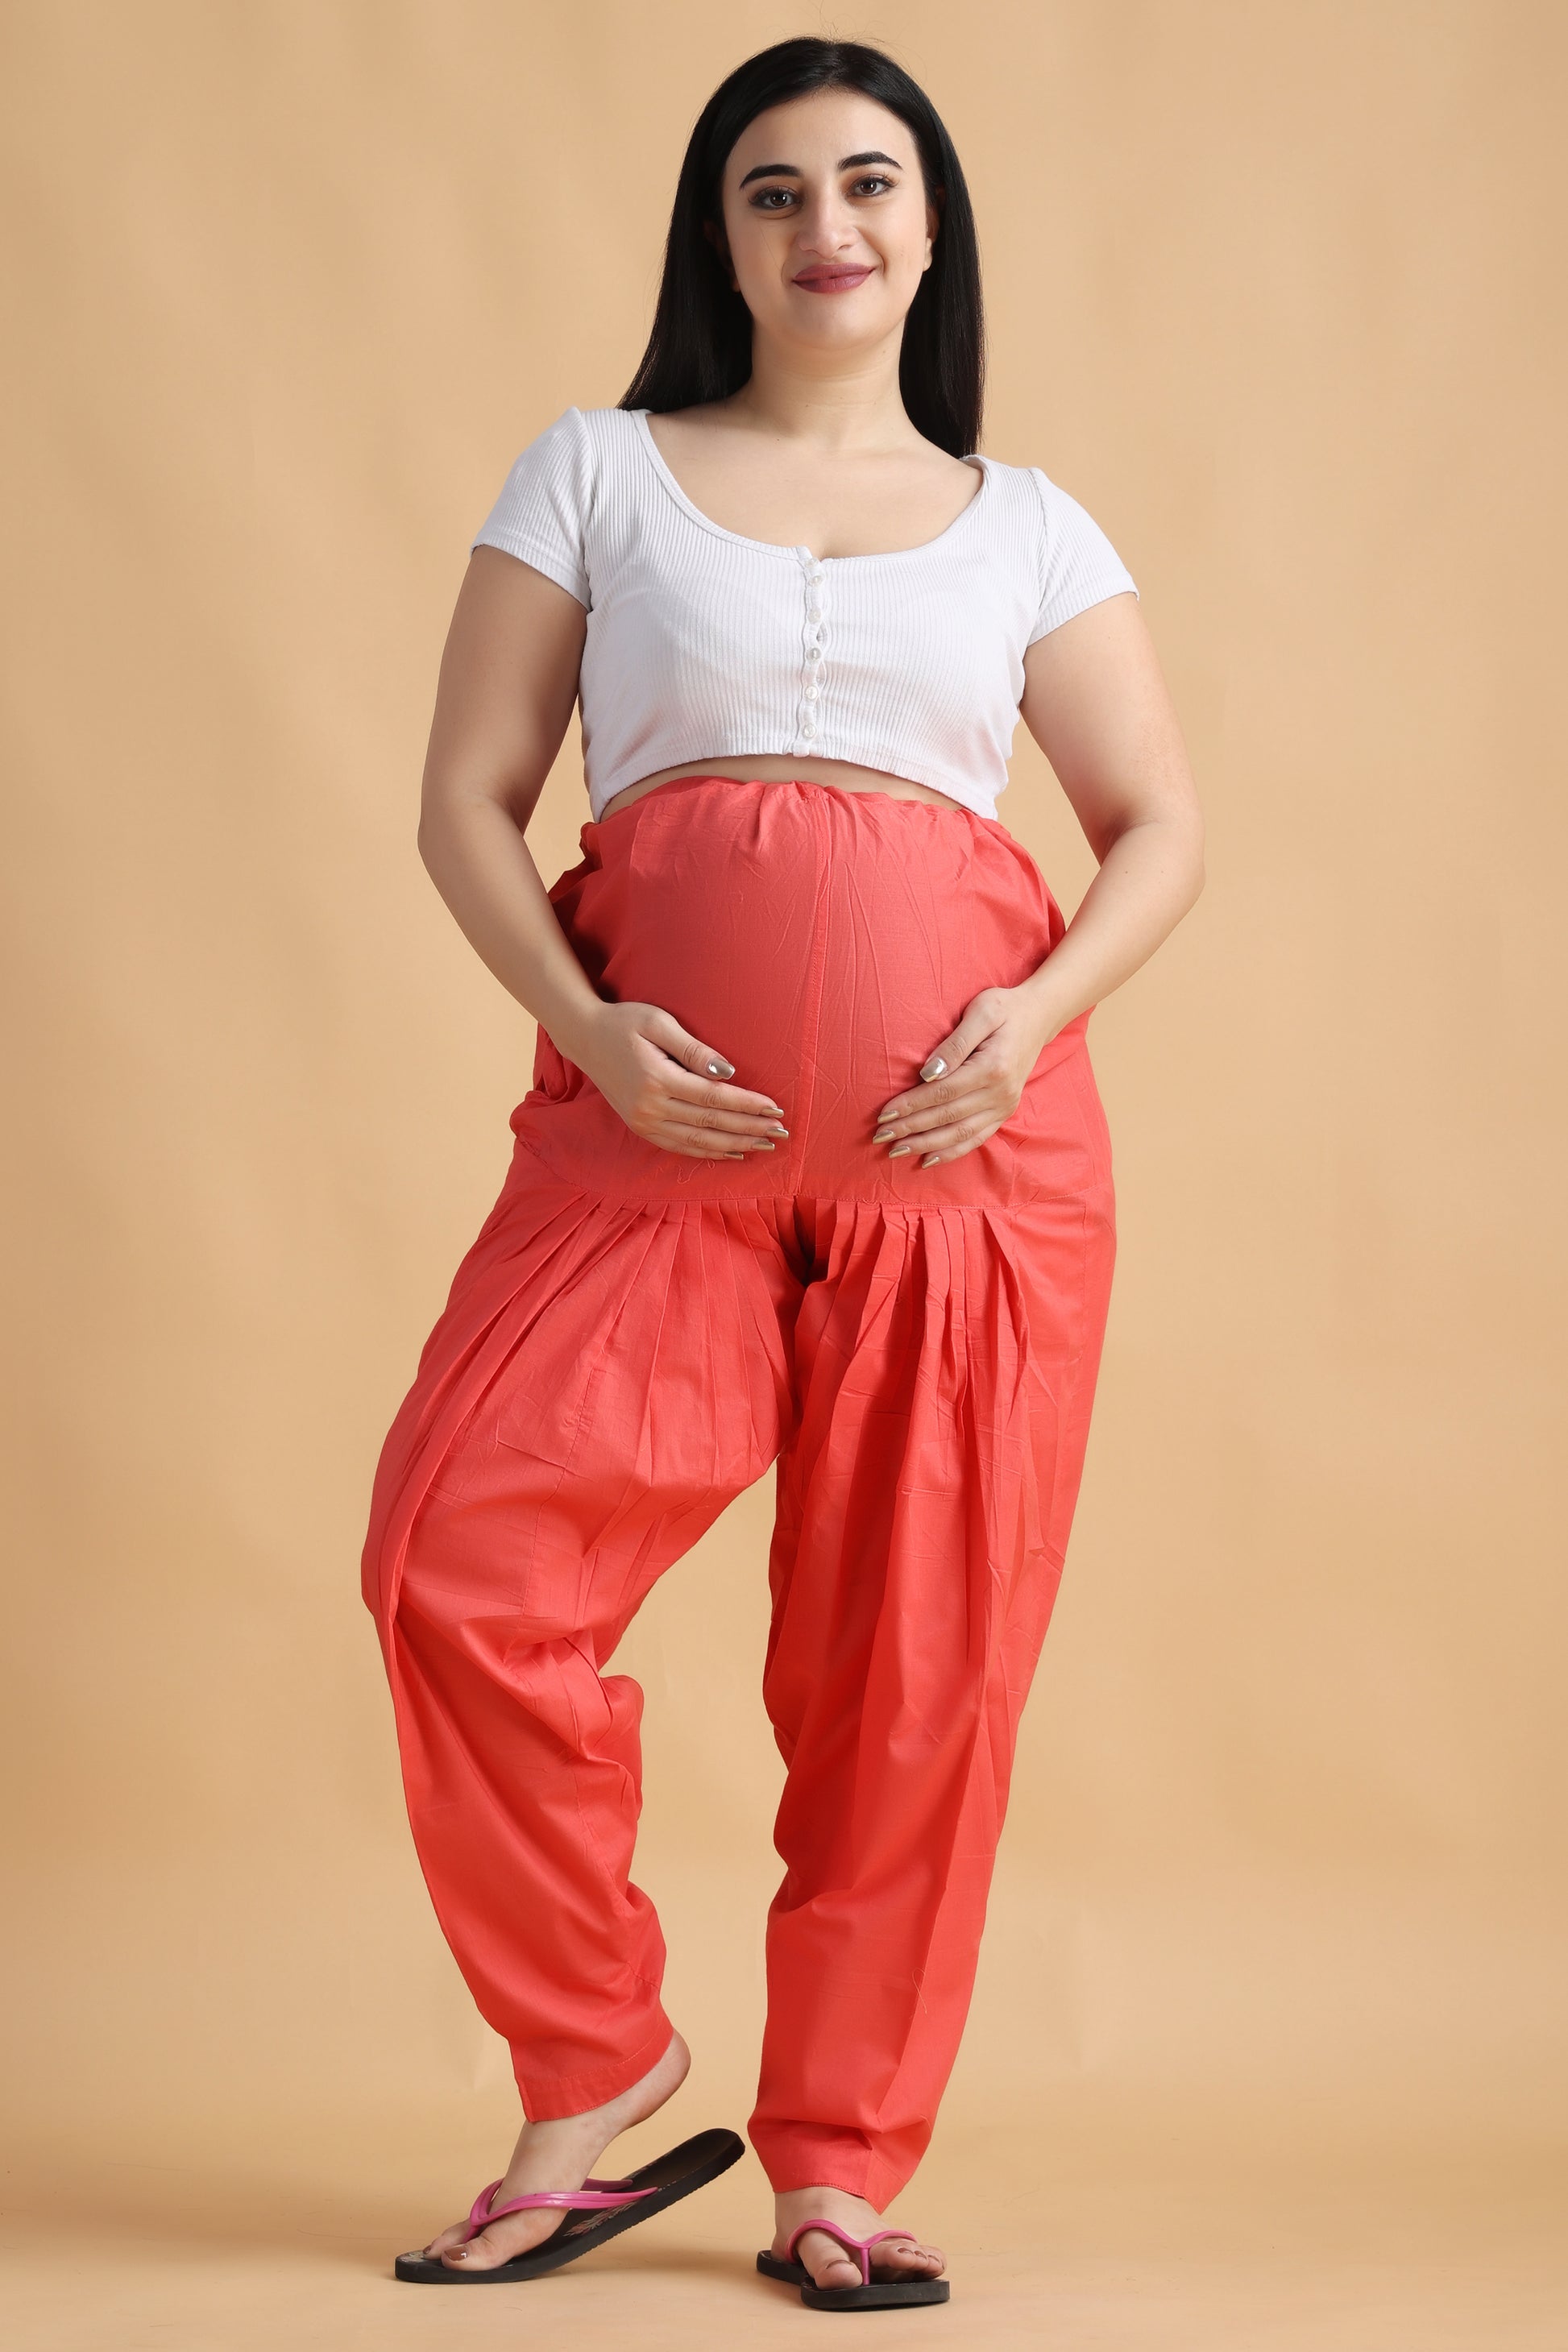 Maternity Pants Online